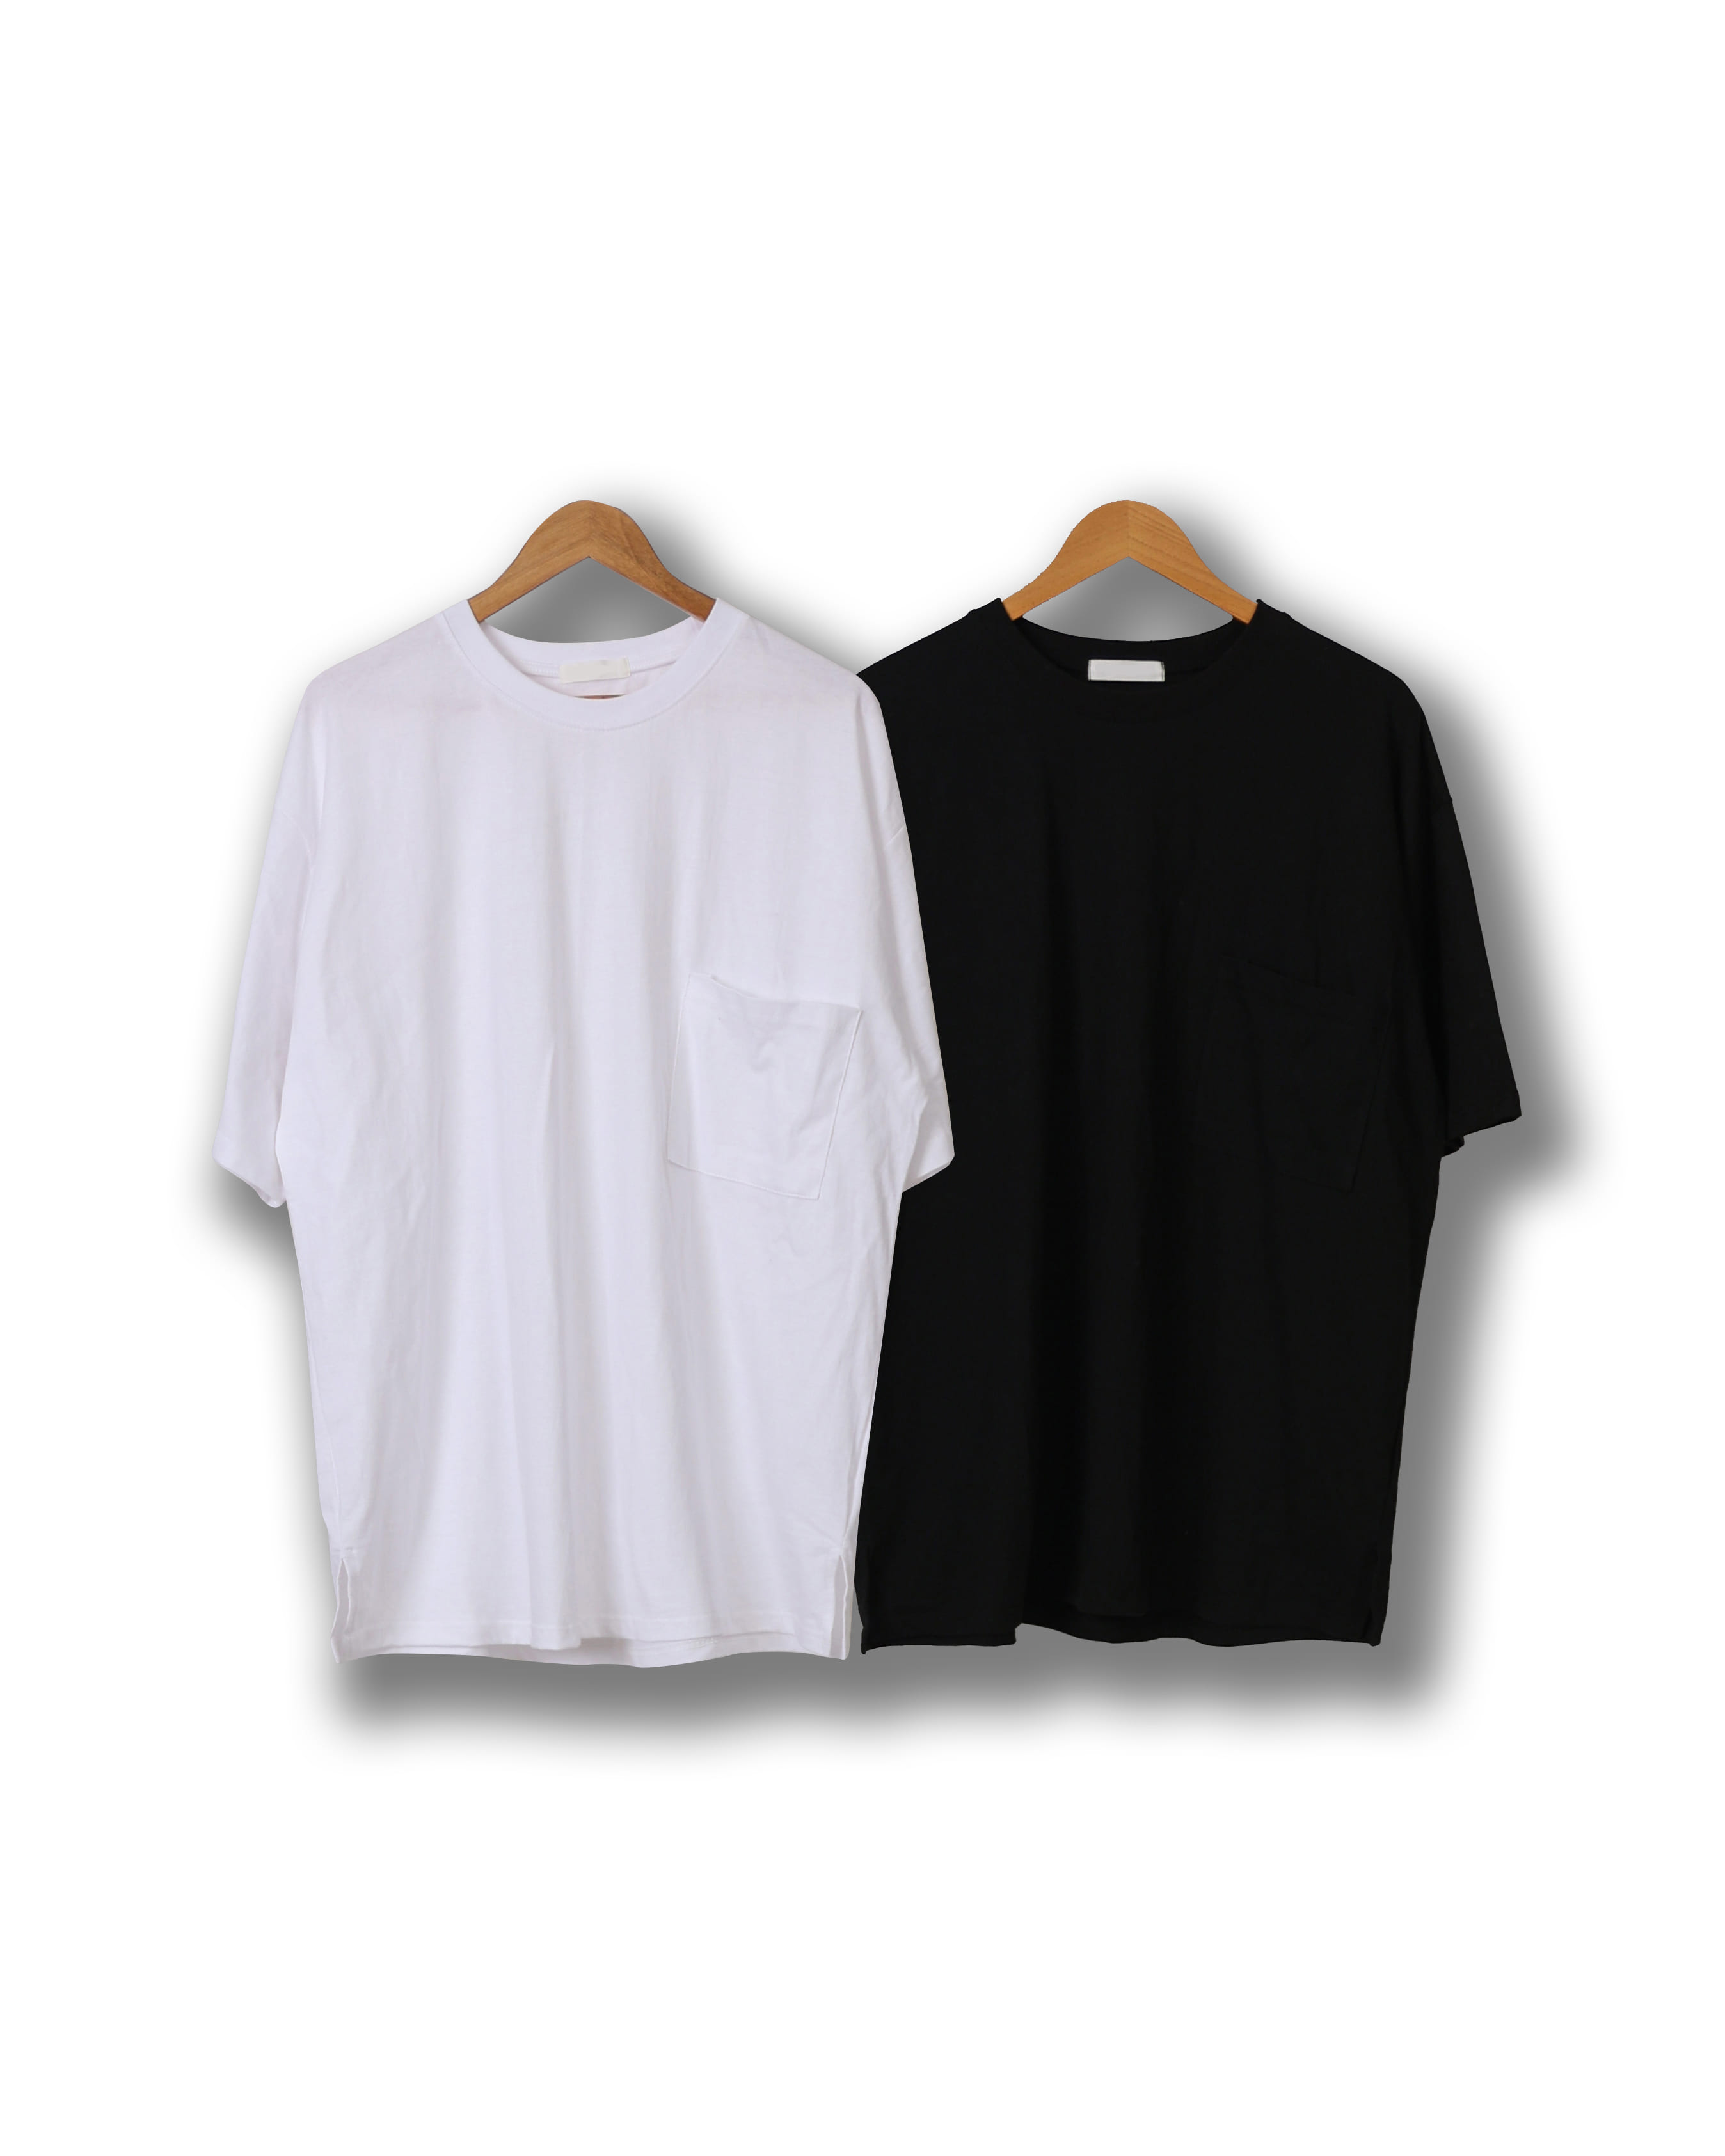 CHOCK City Pocket Over Shirts (Black/White)